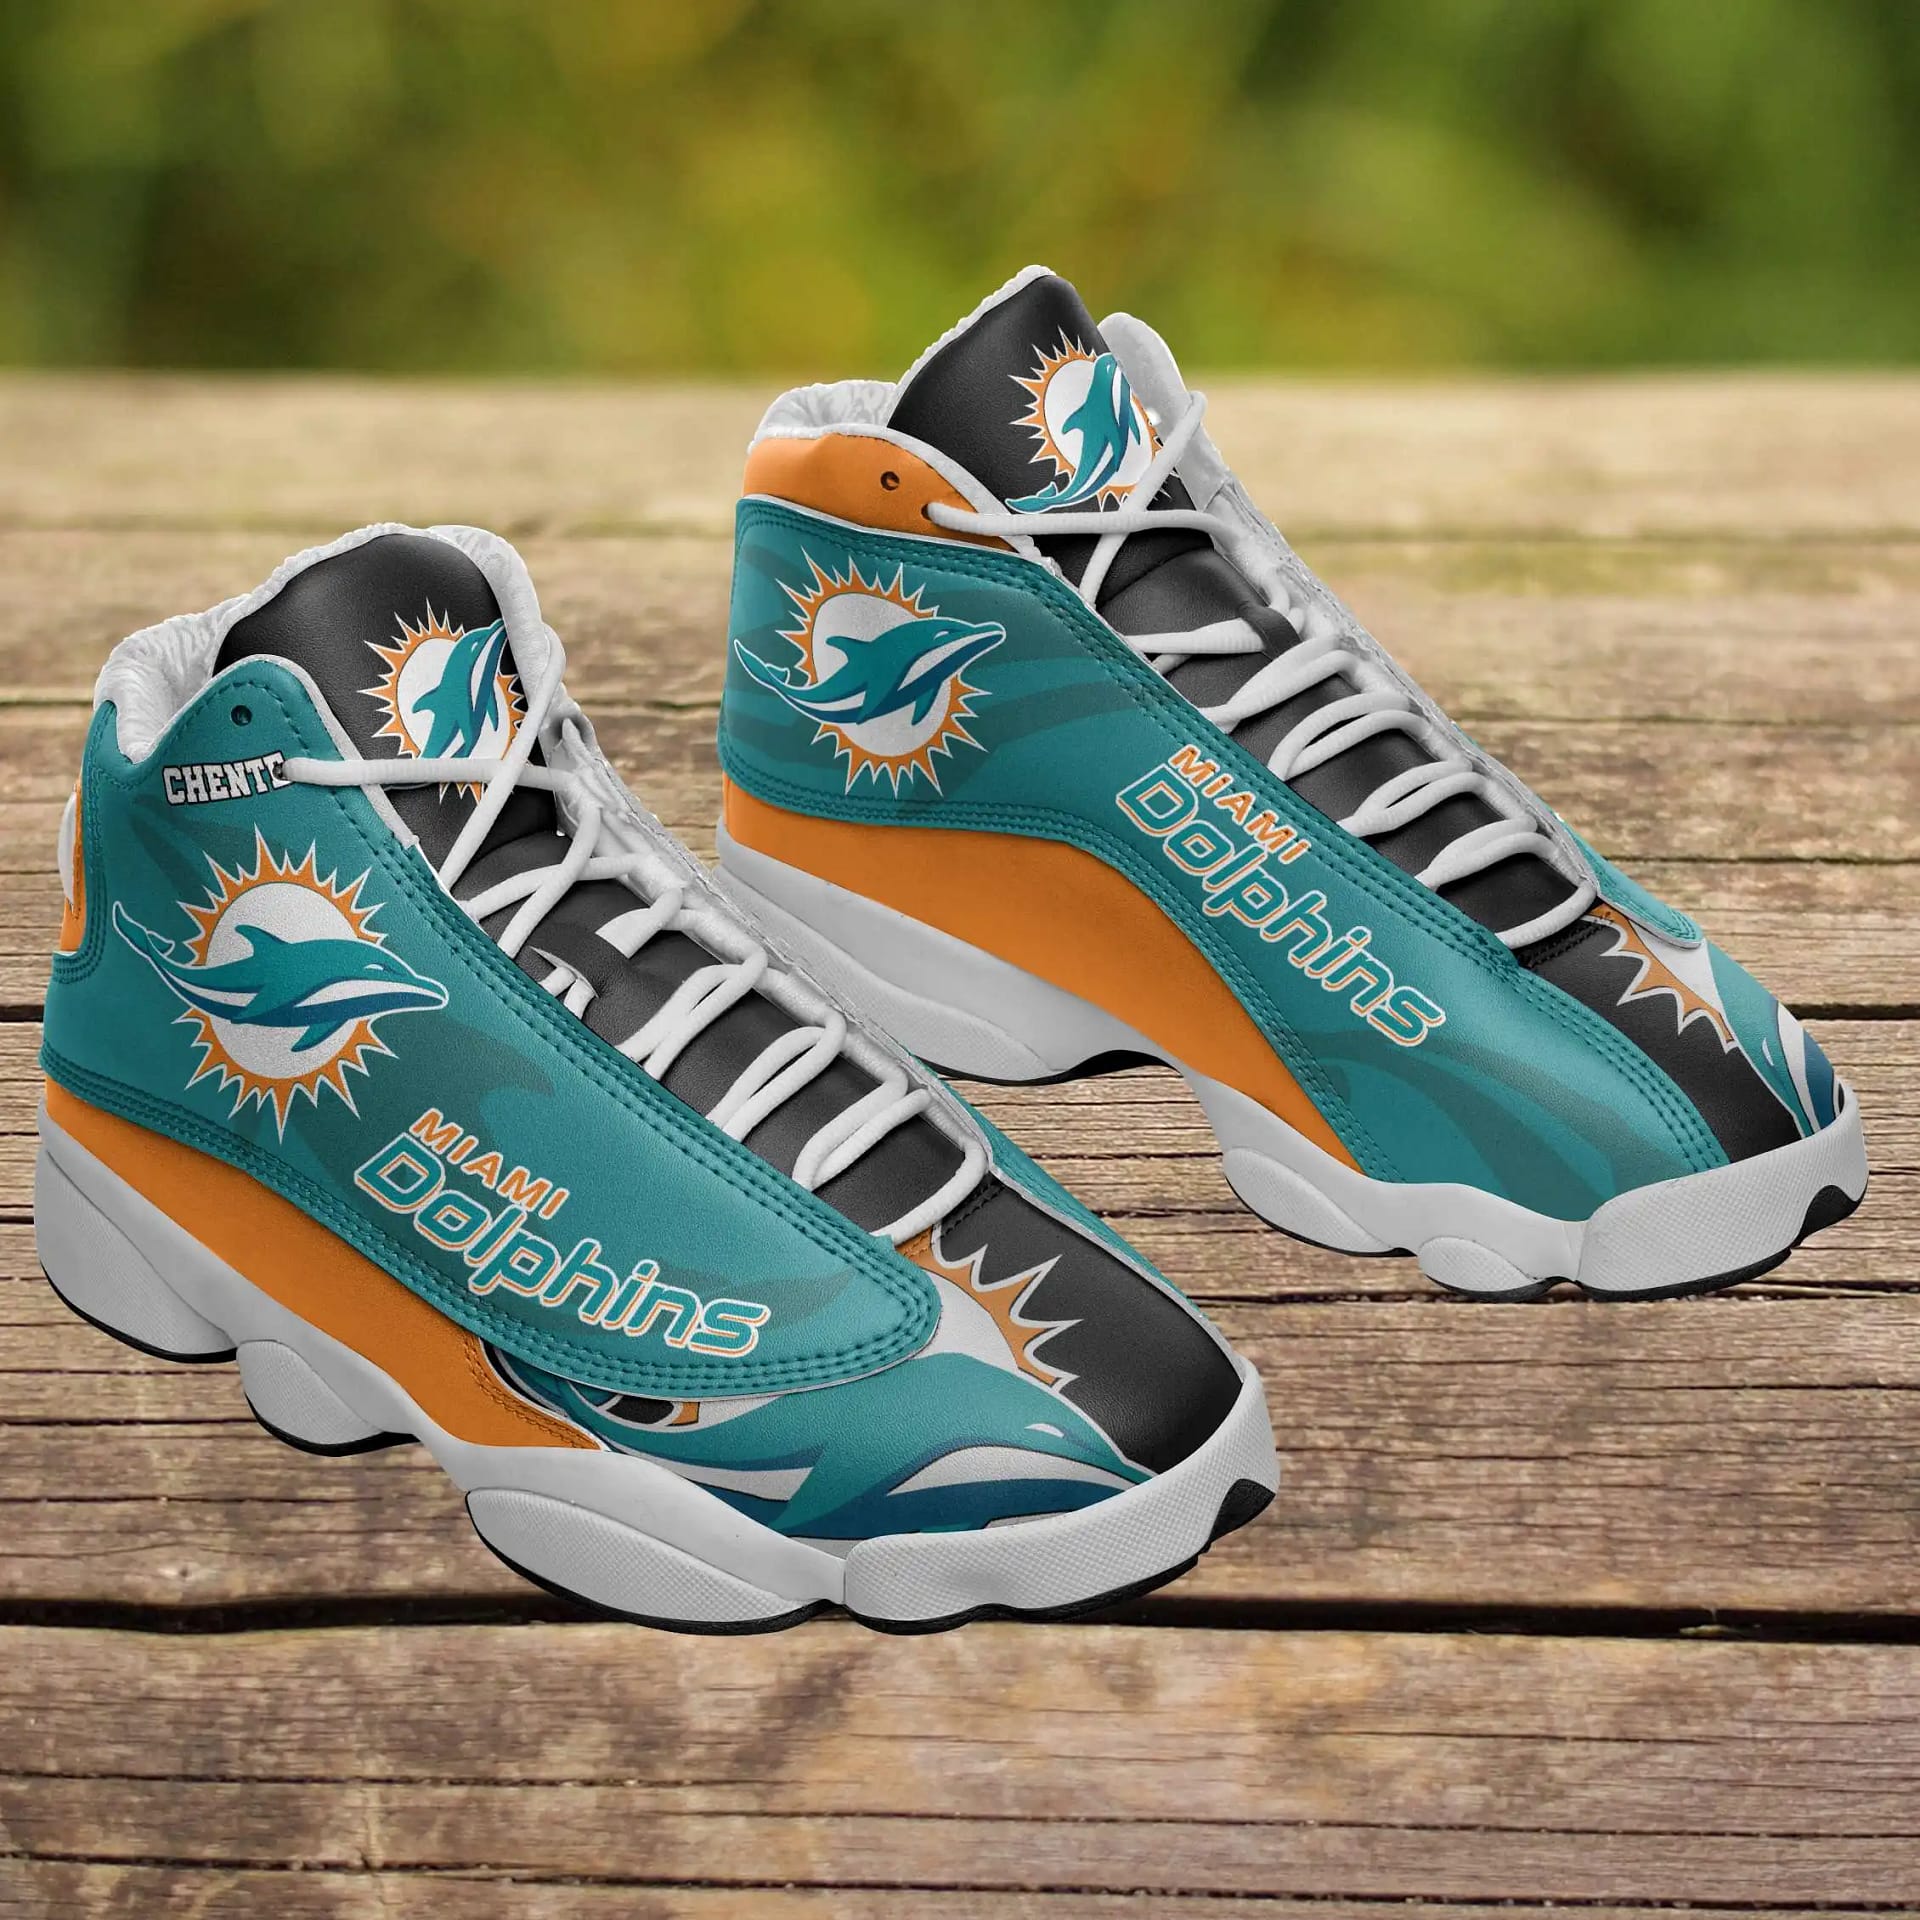 Miami Dolphins Air Jordan Shoes